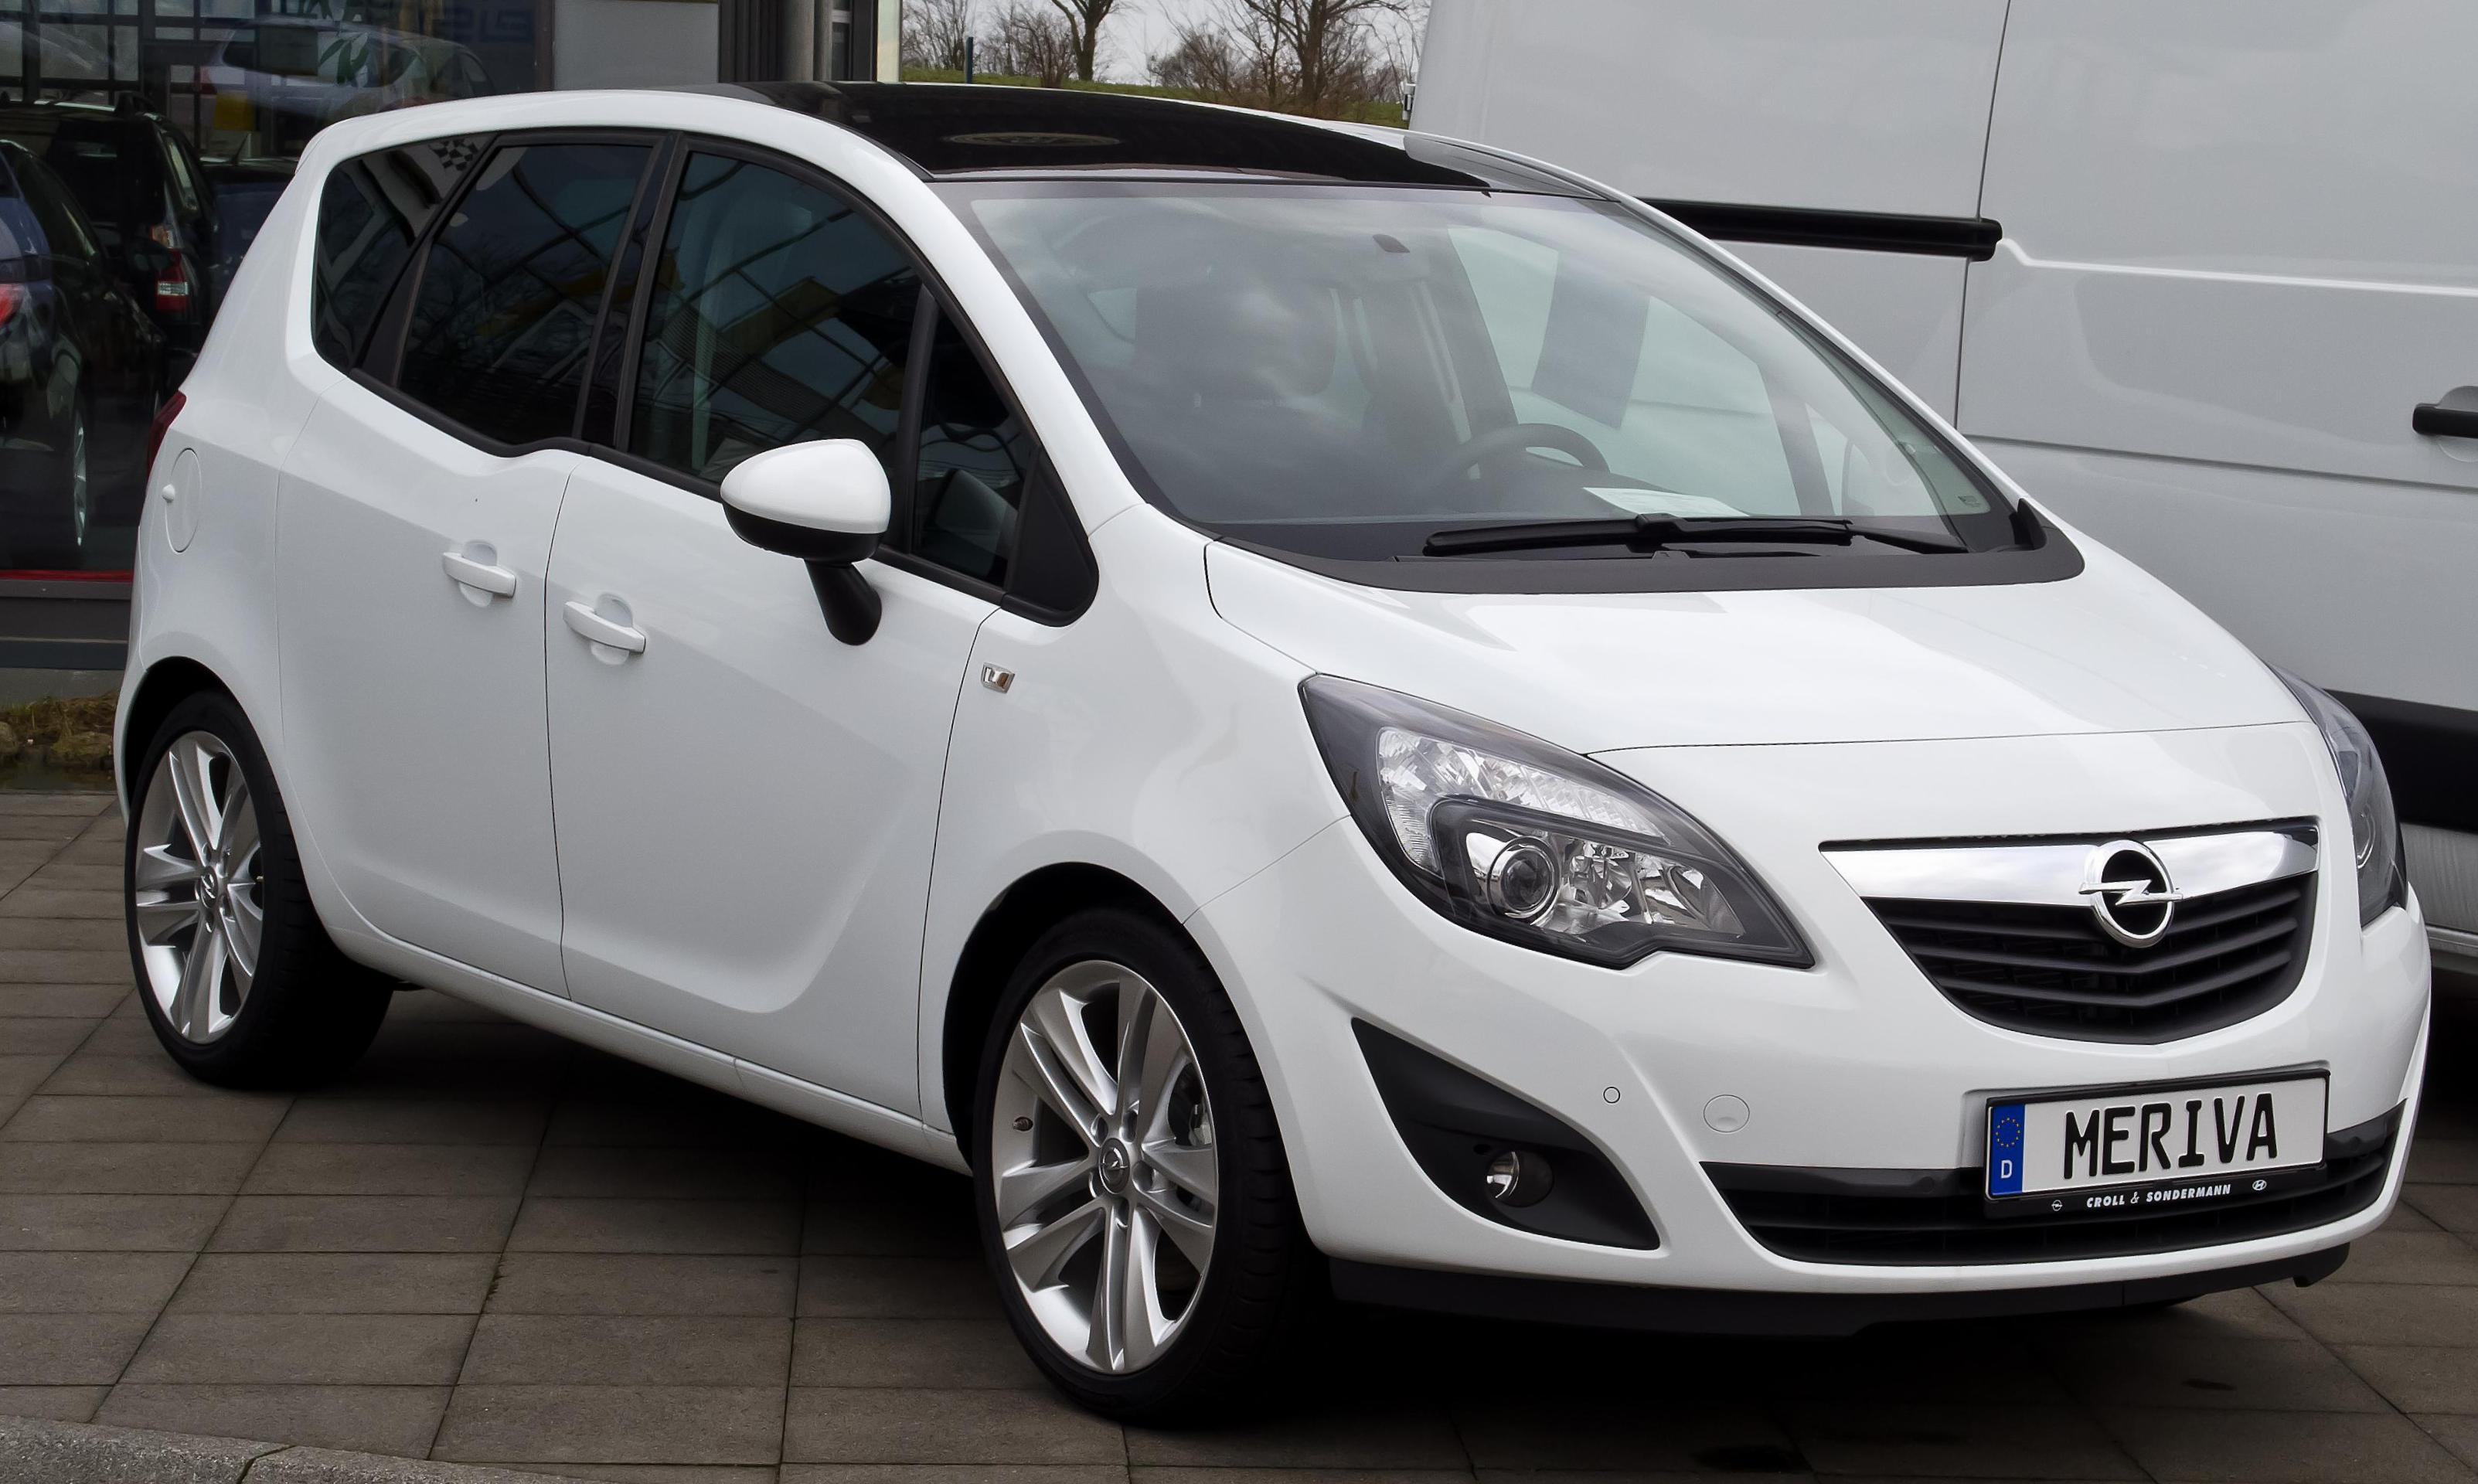 Opel Meriva B spec 2013